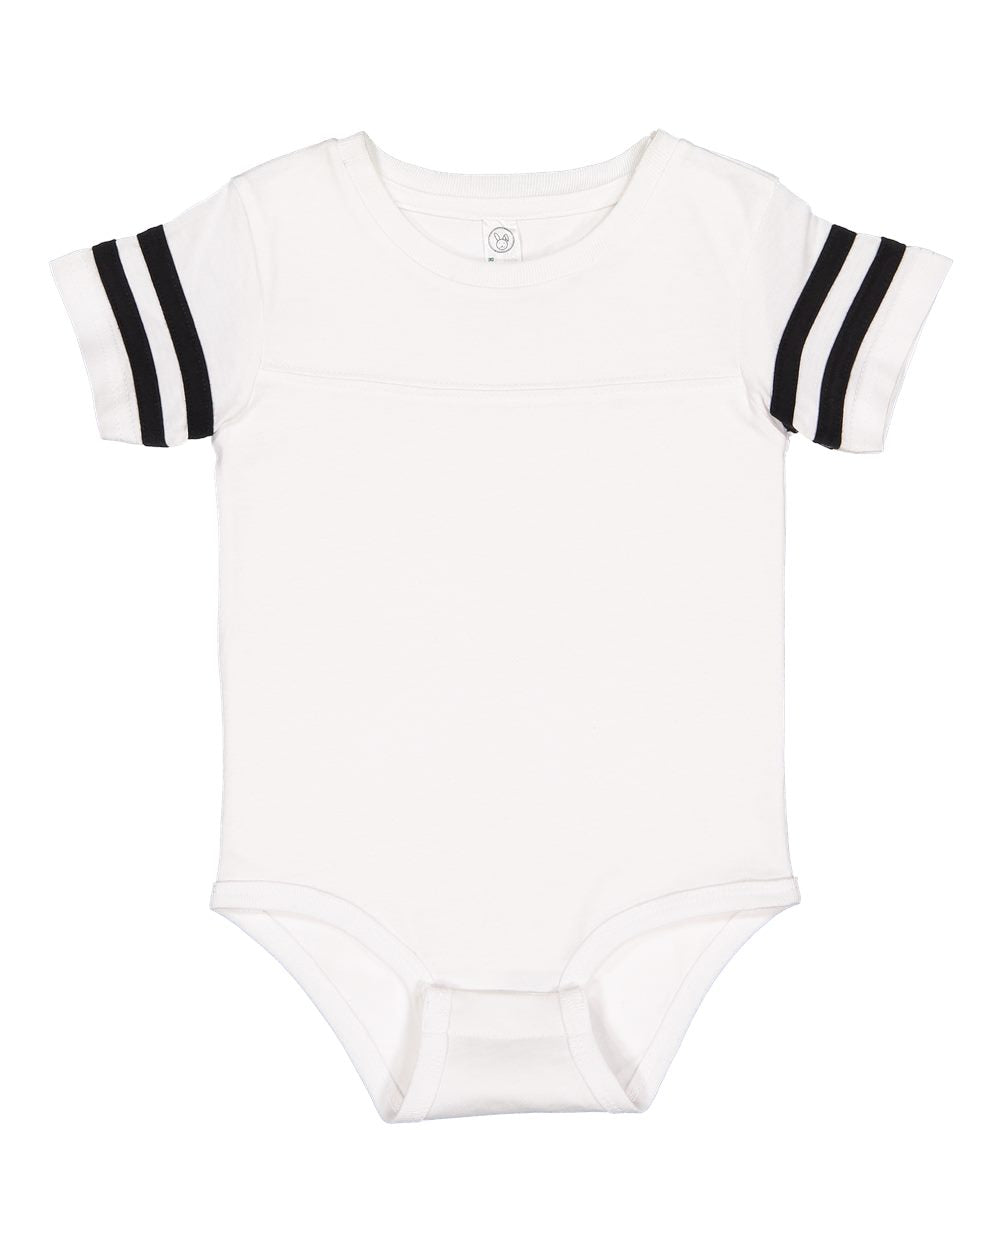 rabbit skins infant football jersey bodysuit white solid black